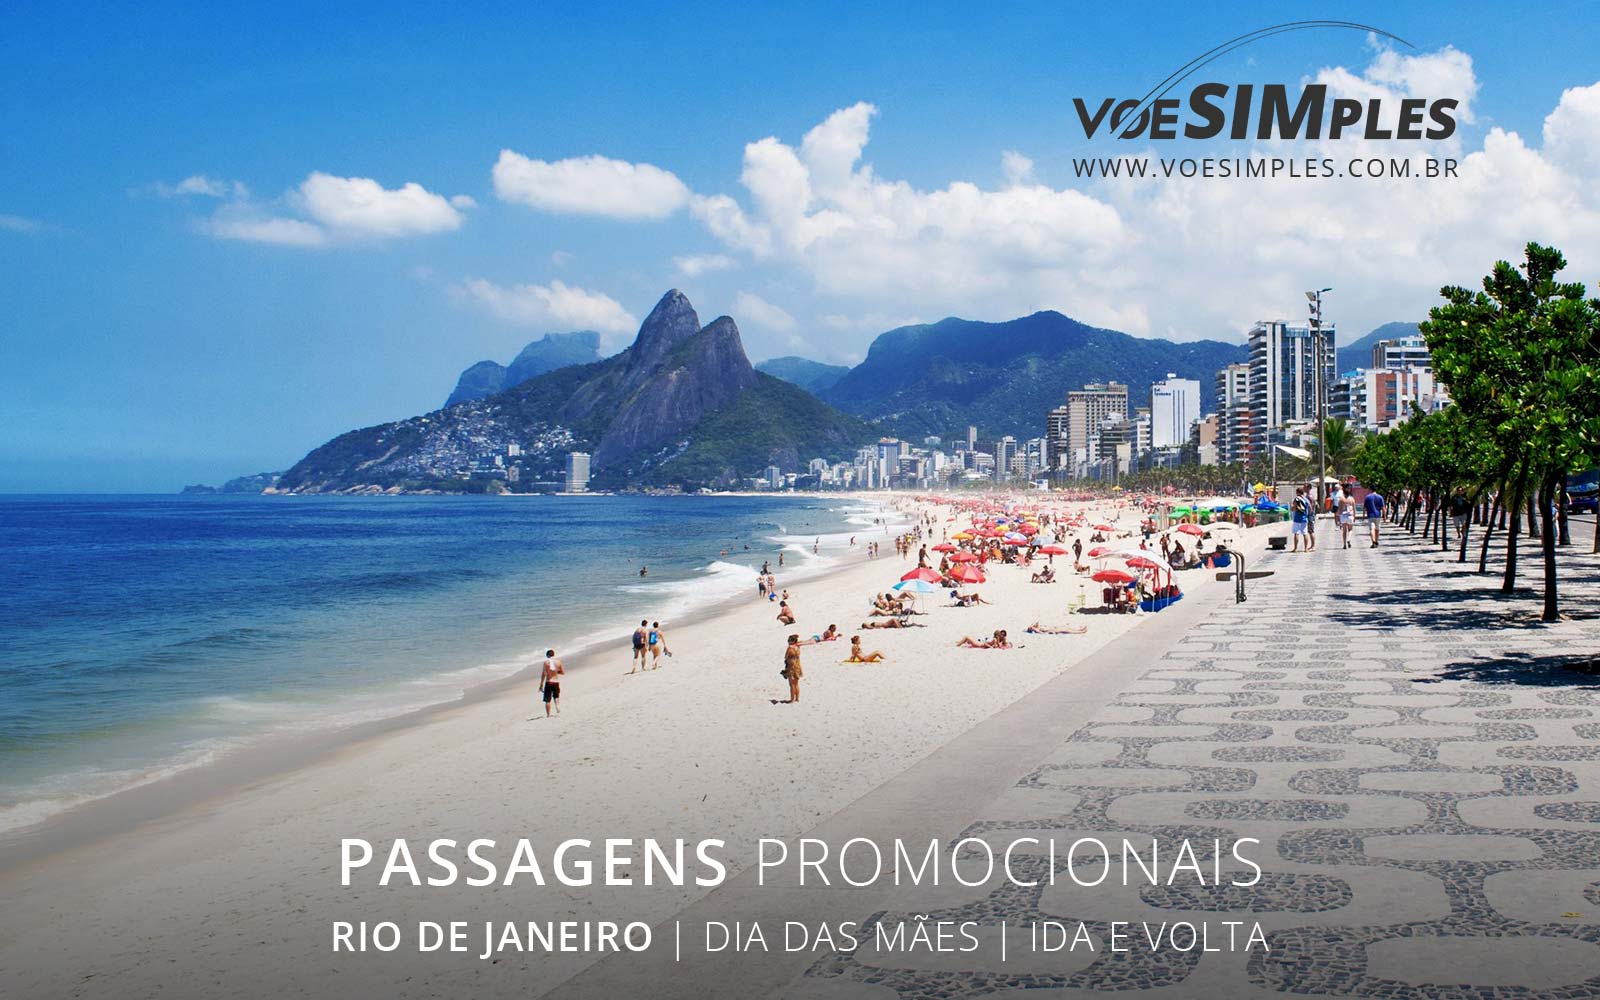 passagens-aereas-baratas-multi-destinos-nacionais-brasil-voe-simples-passages-aereas-promocionais-nacionais-passagens-promo-multi-destinos